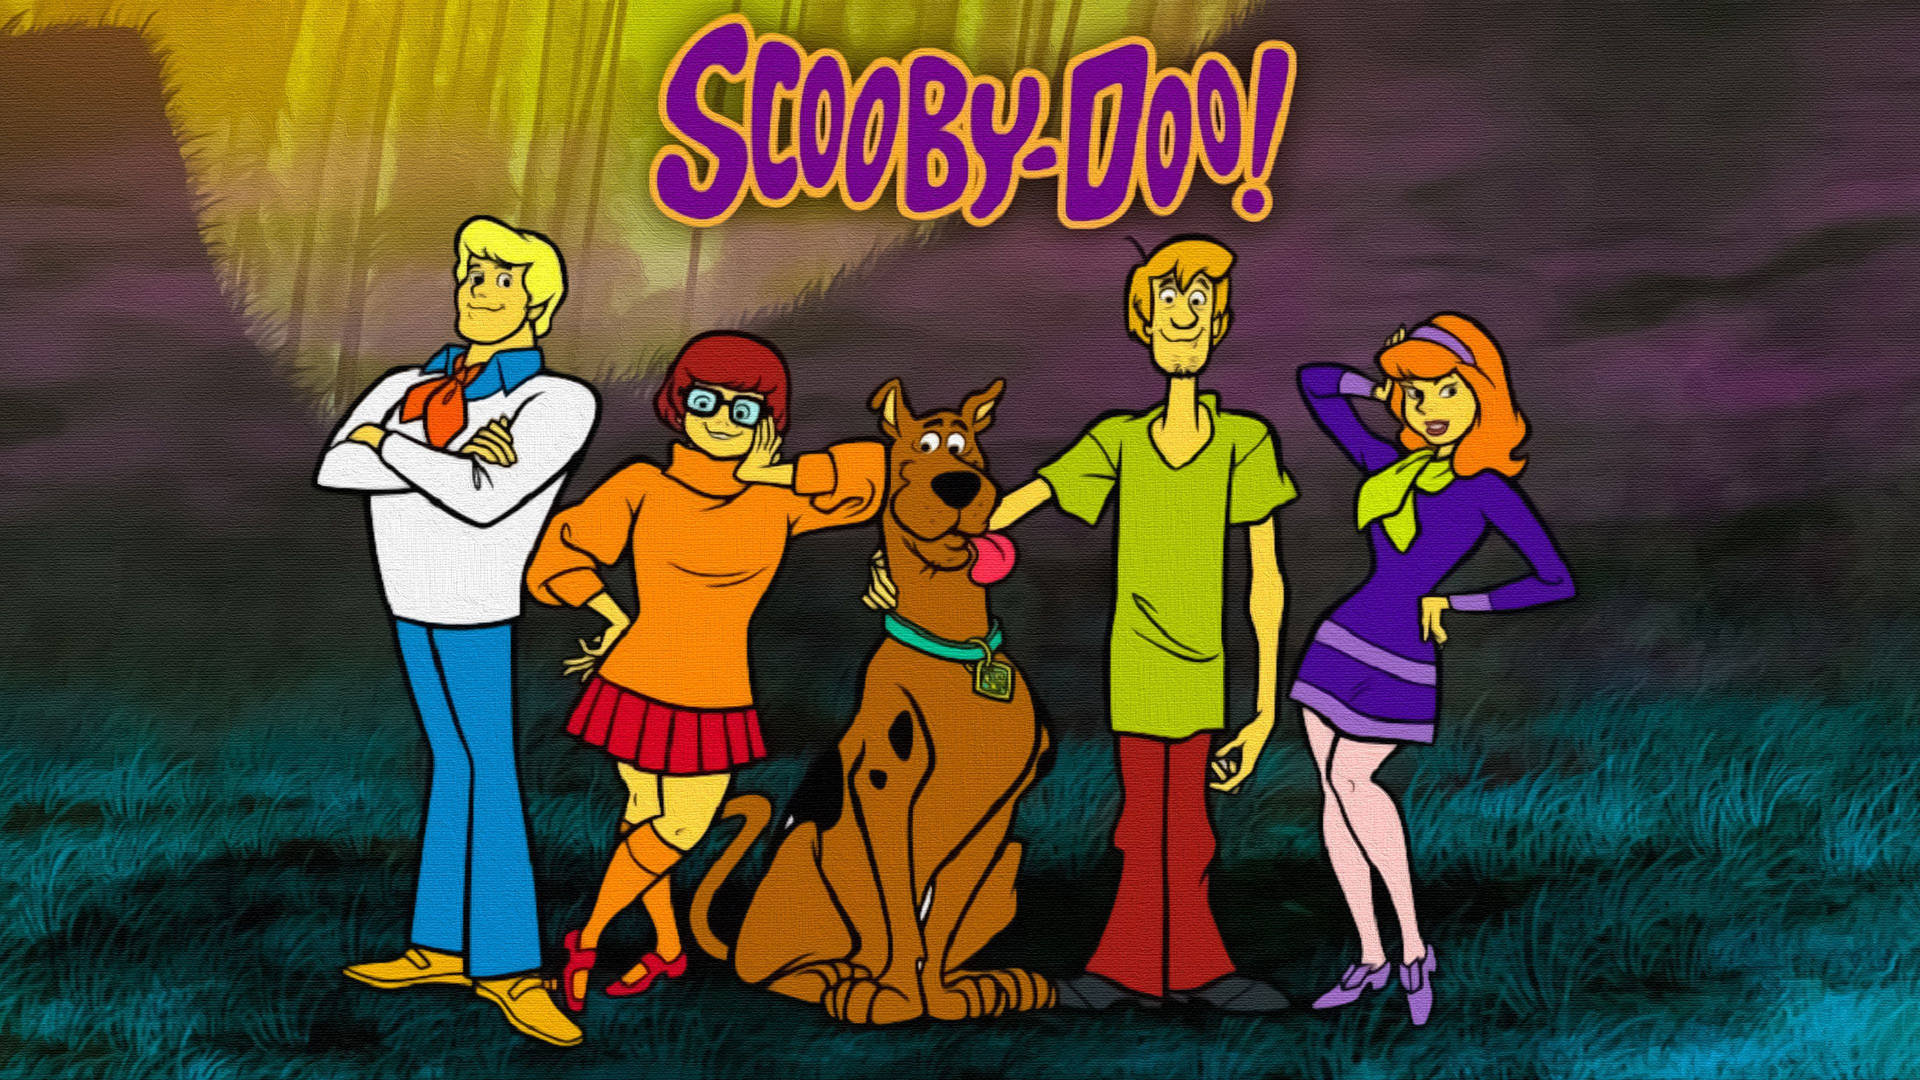 Free Scooby Doo Wallpaper Downloads, Scooby Doo Wallpaper for FREE